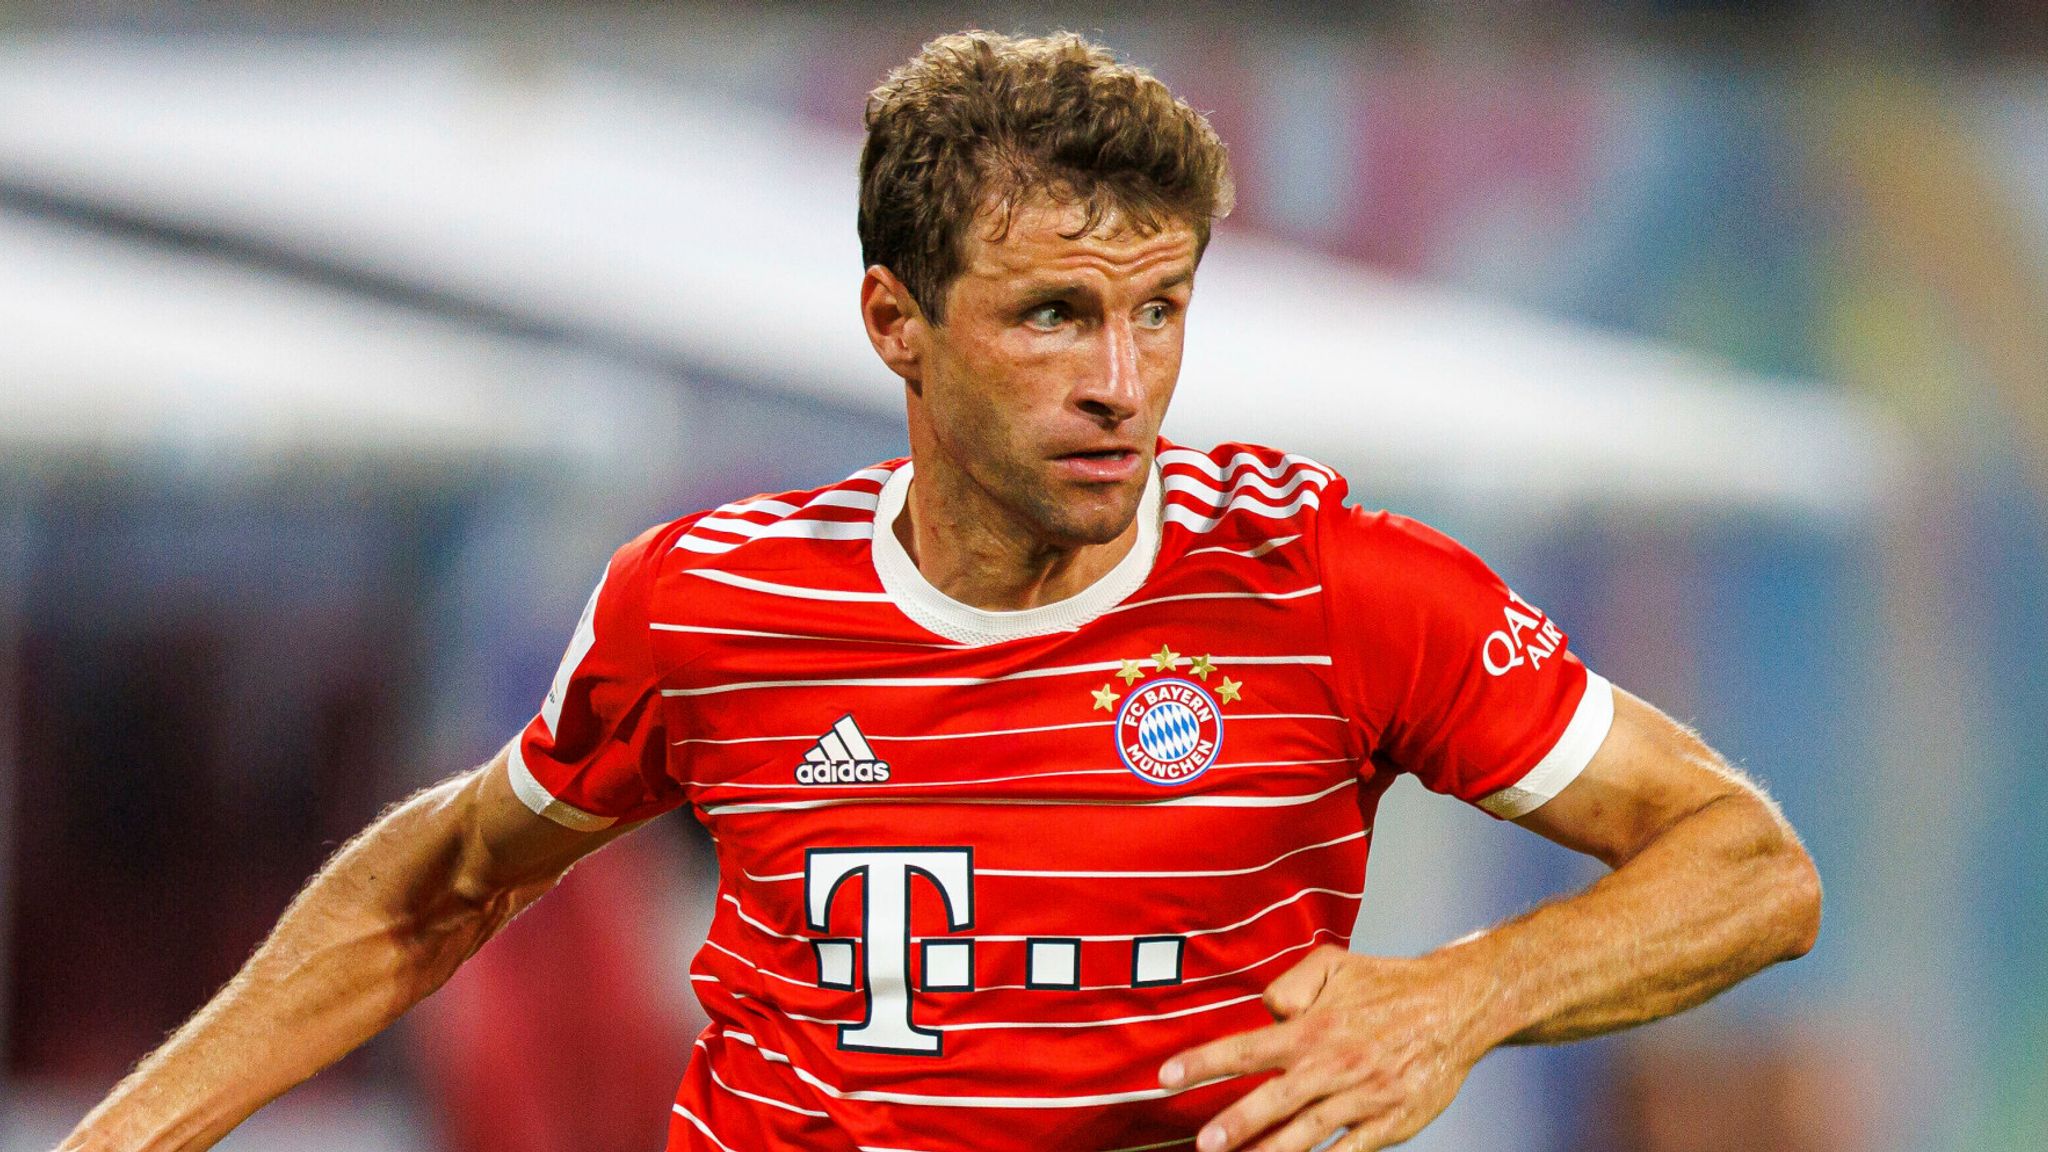 Thomas Muller wants to leave Bayern after this season 2